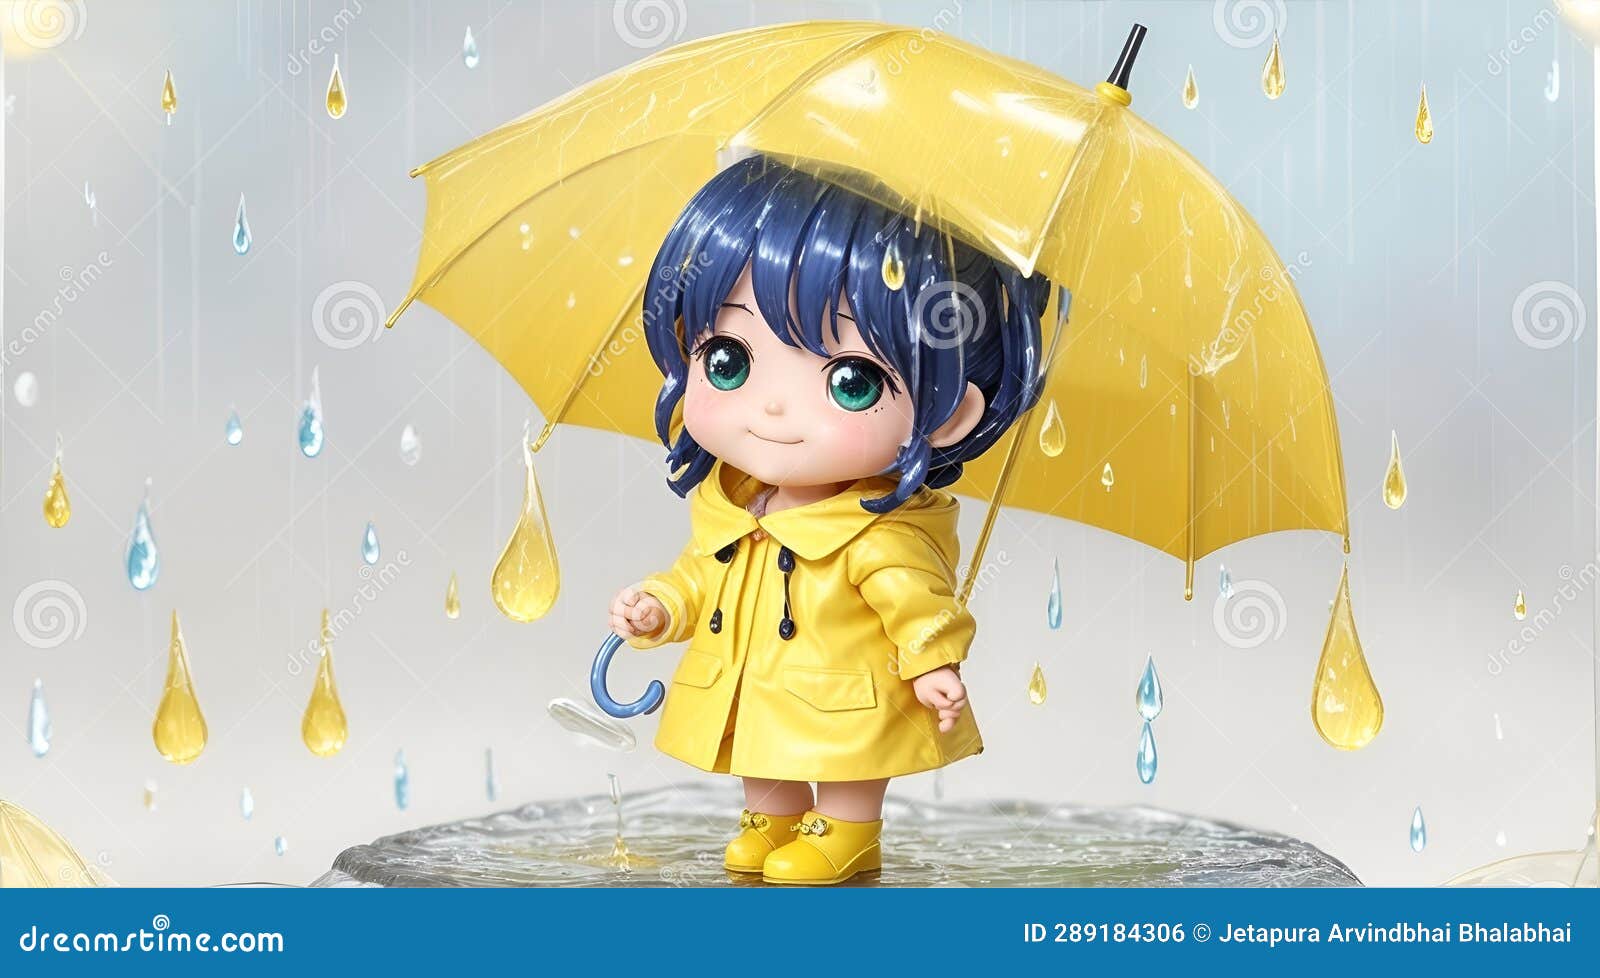 Shop Anime Rain Coat online | Lazada.com.my